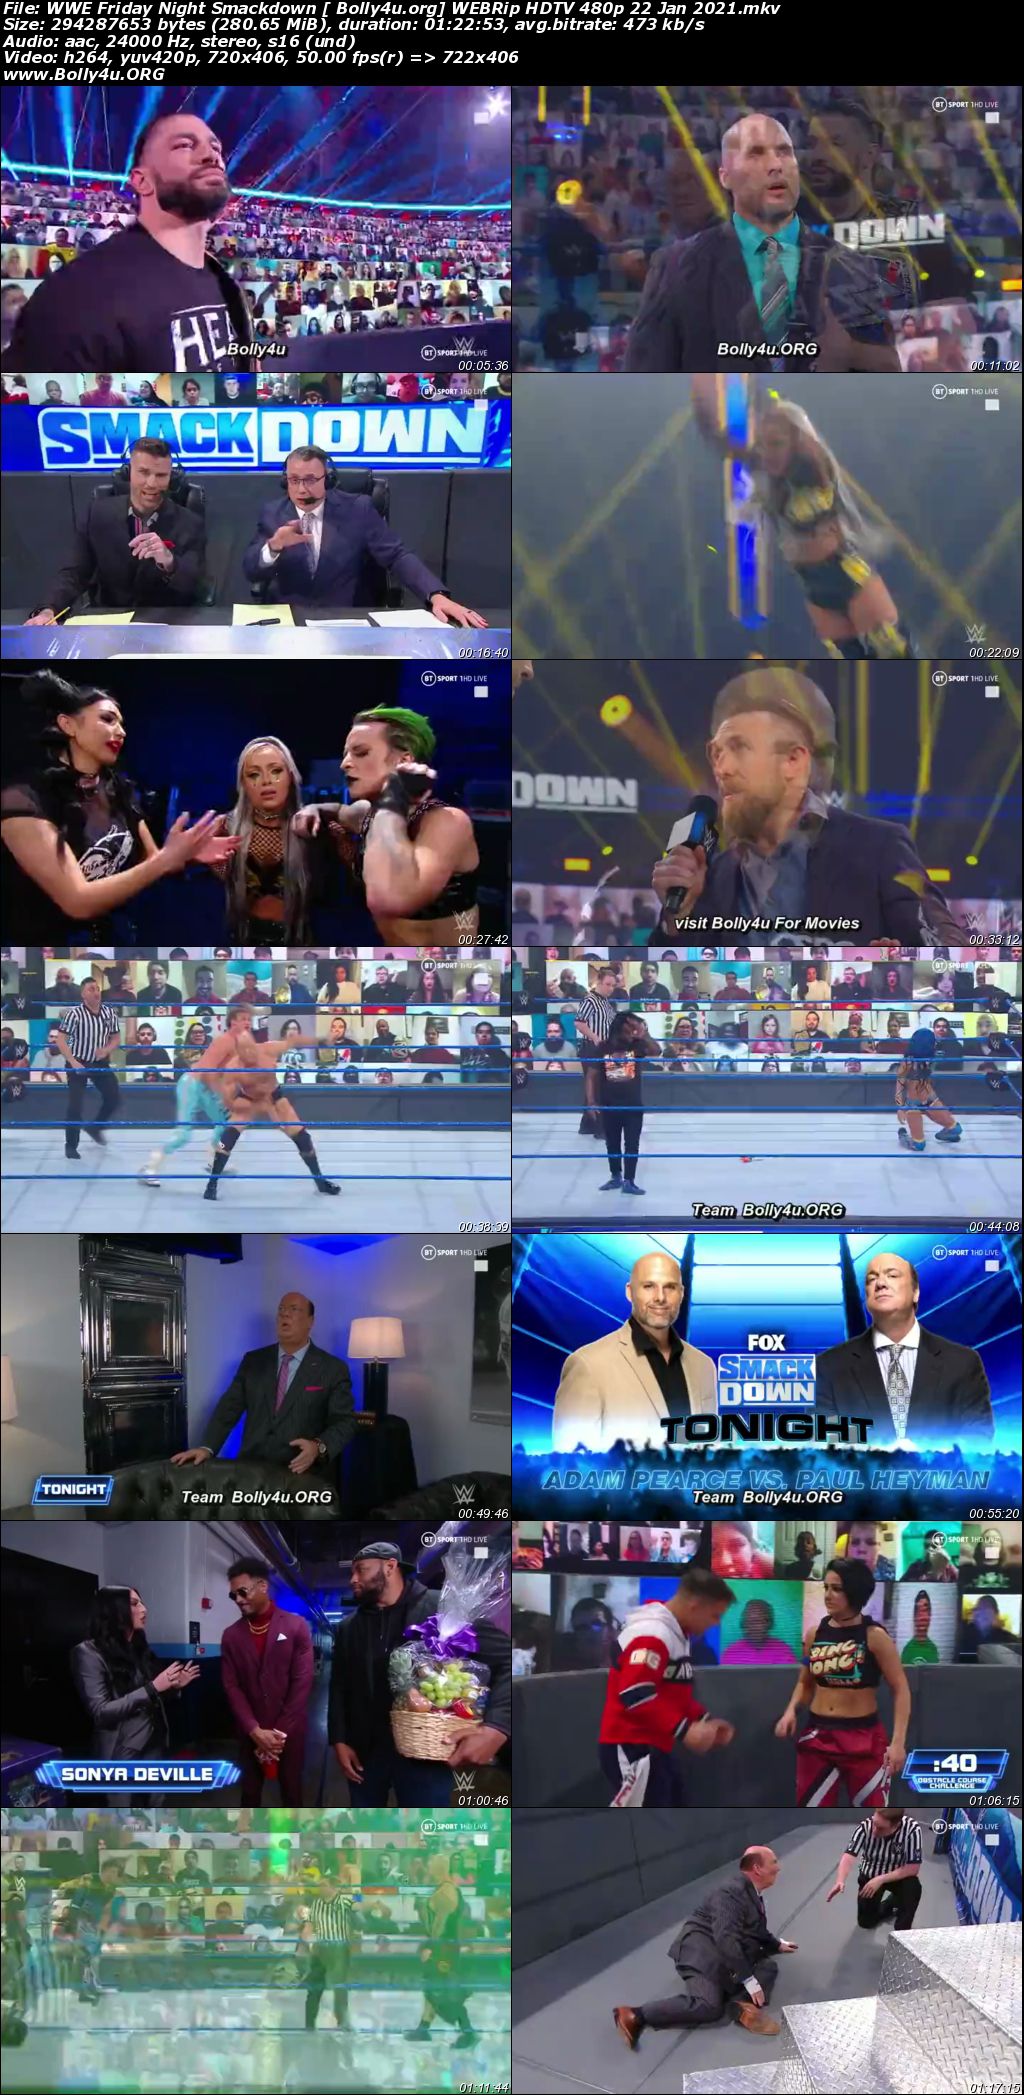 WWE Friday Night Smackdown HDTV 480p 280Mb 22 Jan 2021 Download